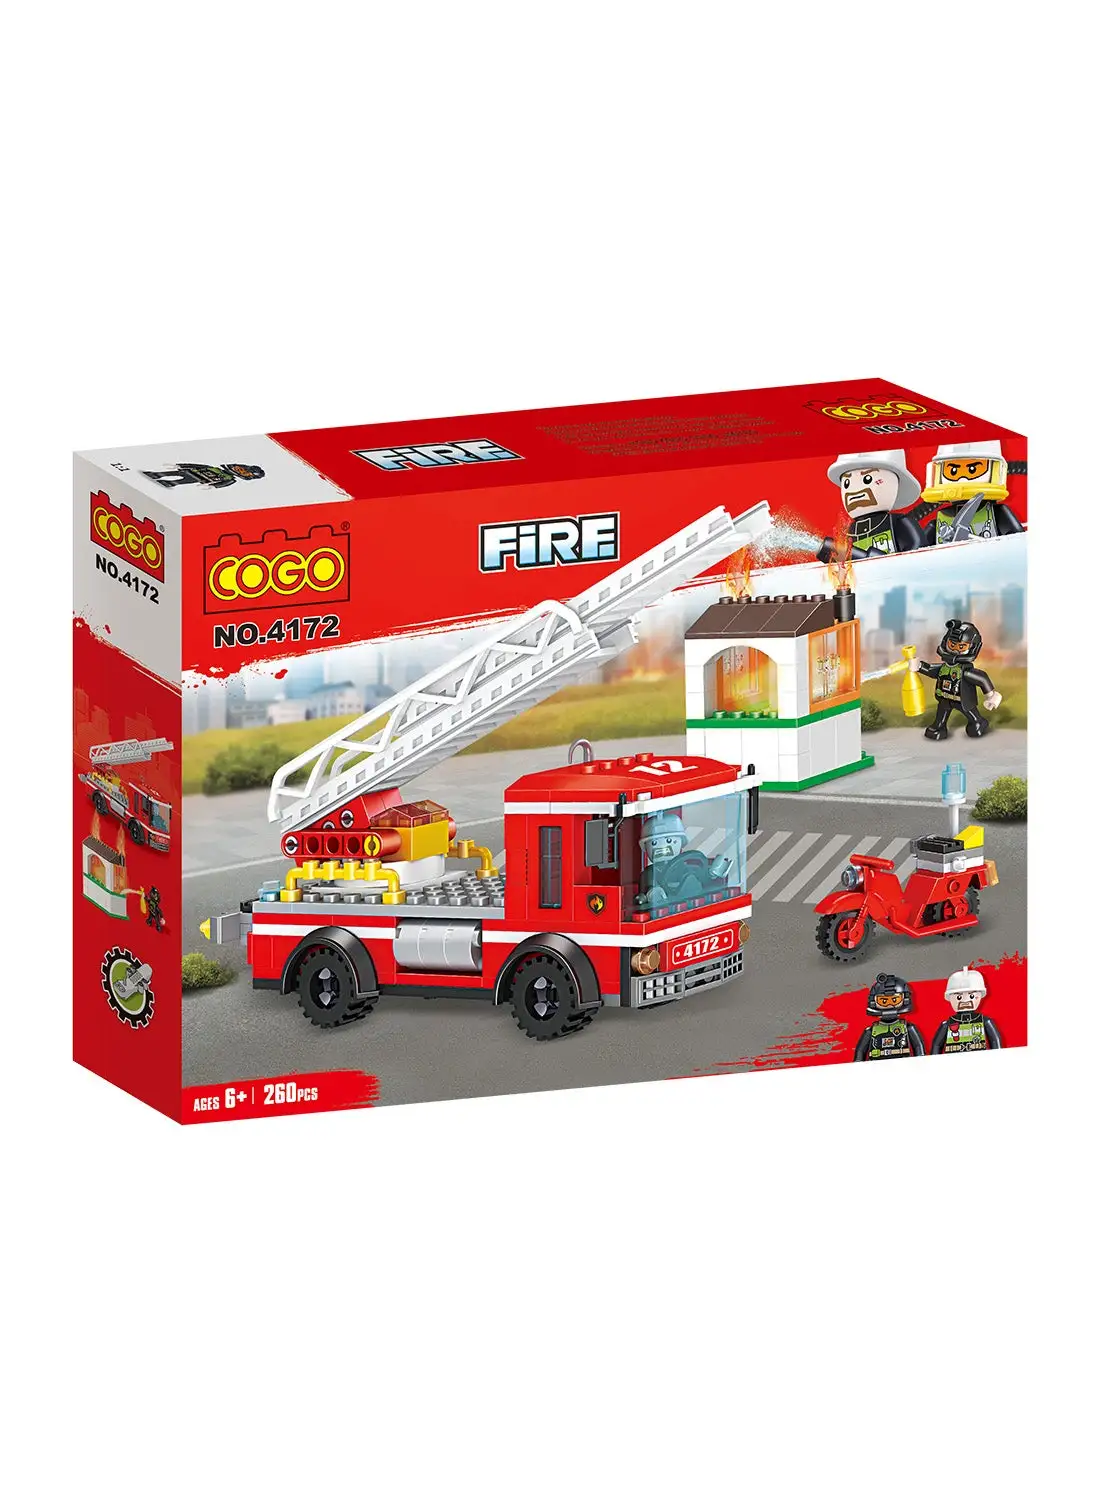 COGO 4172 260-Piece Firefighter Series Blocks Set 6+ Years